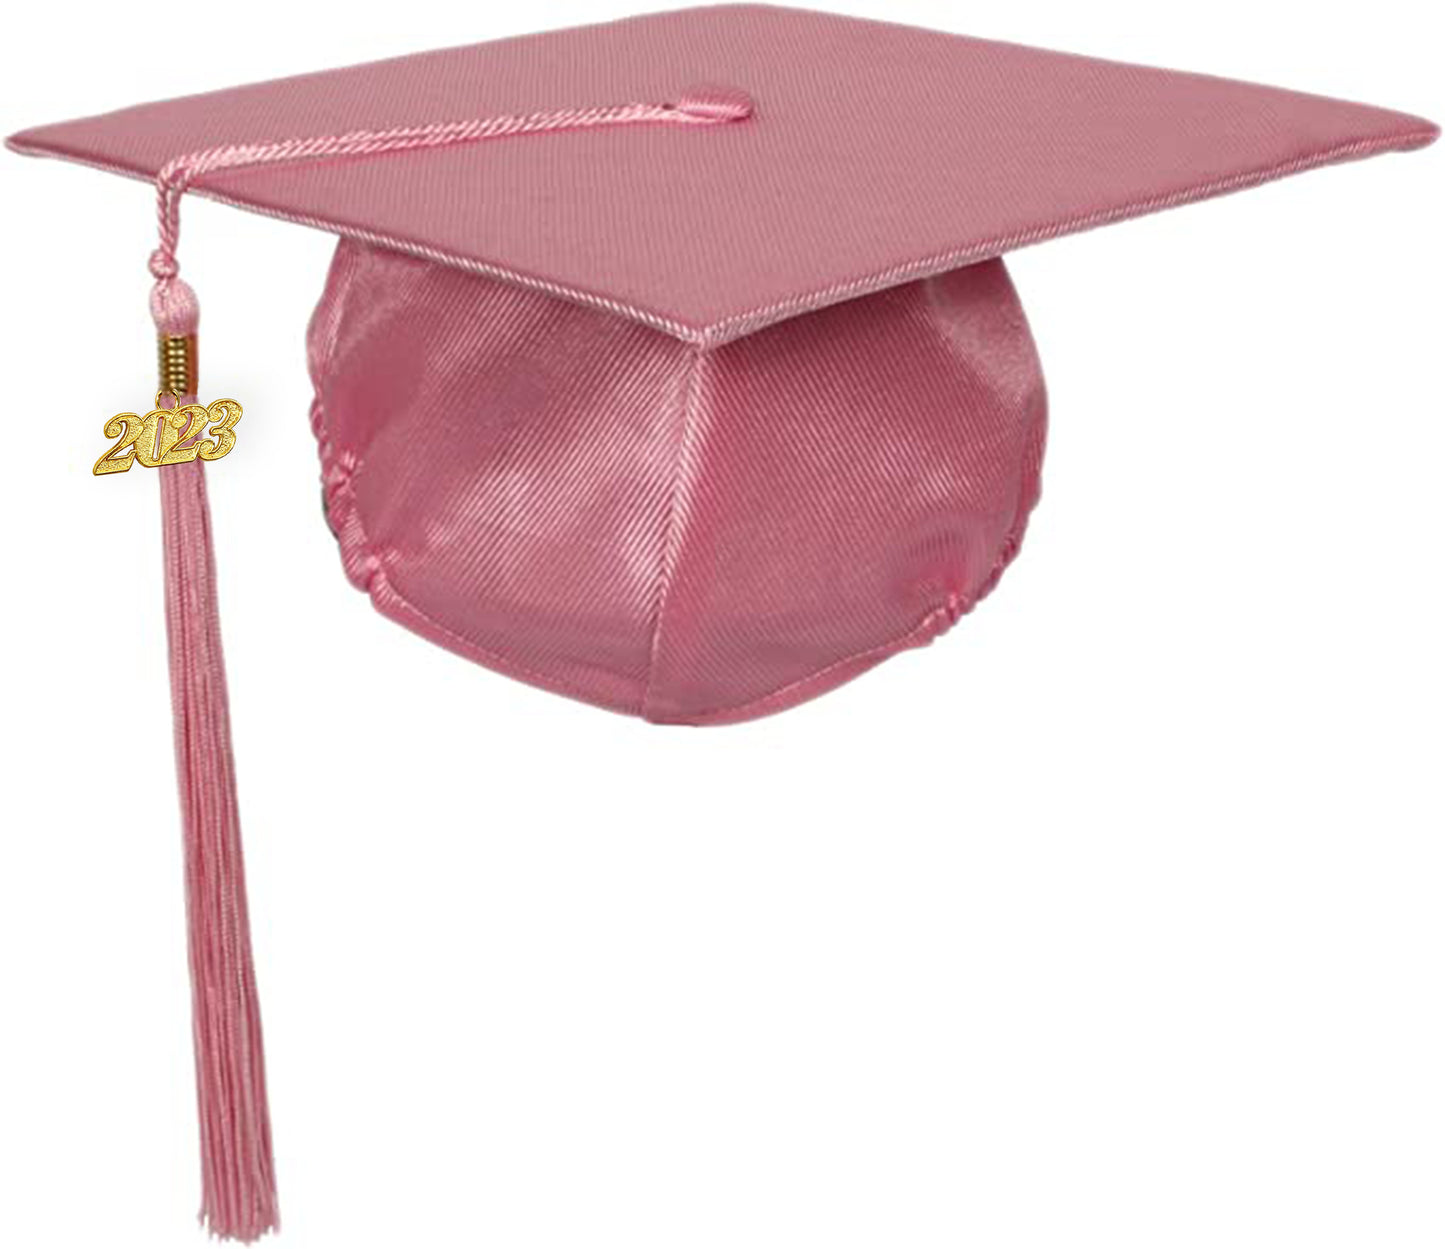 Shiny Pink Graduation Cap and Tassel